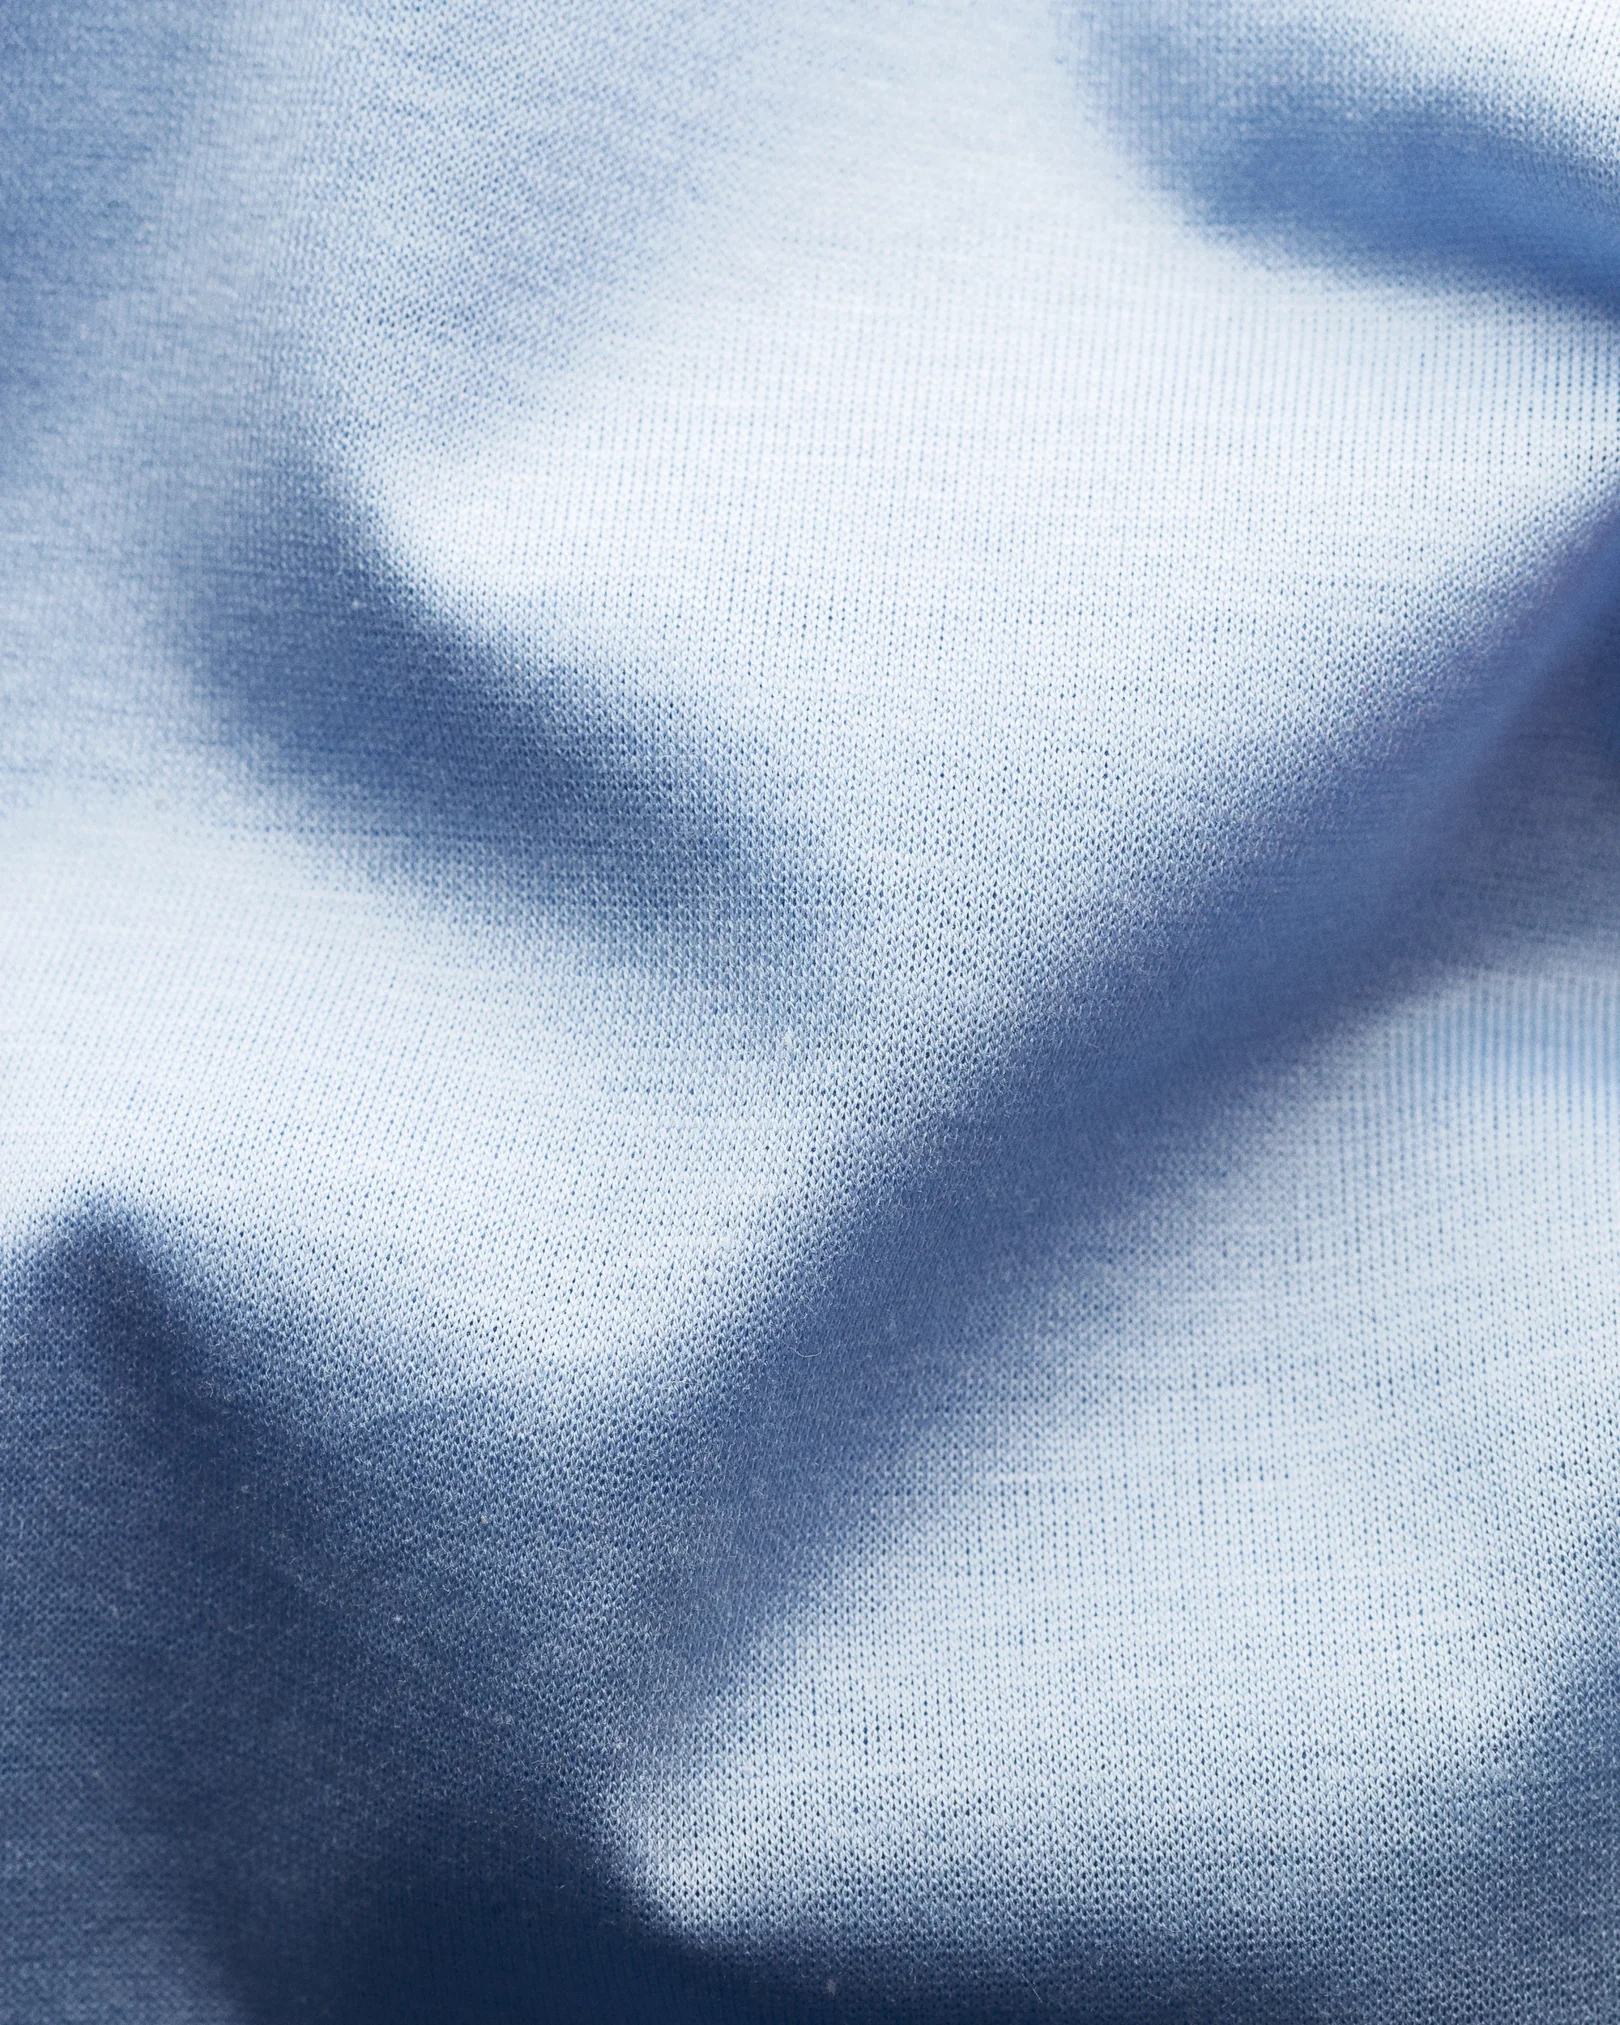 Eton - light blue jersey shirt wide spread jersey single rounded slim